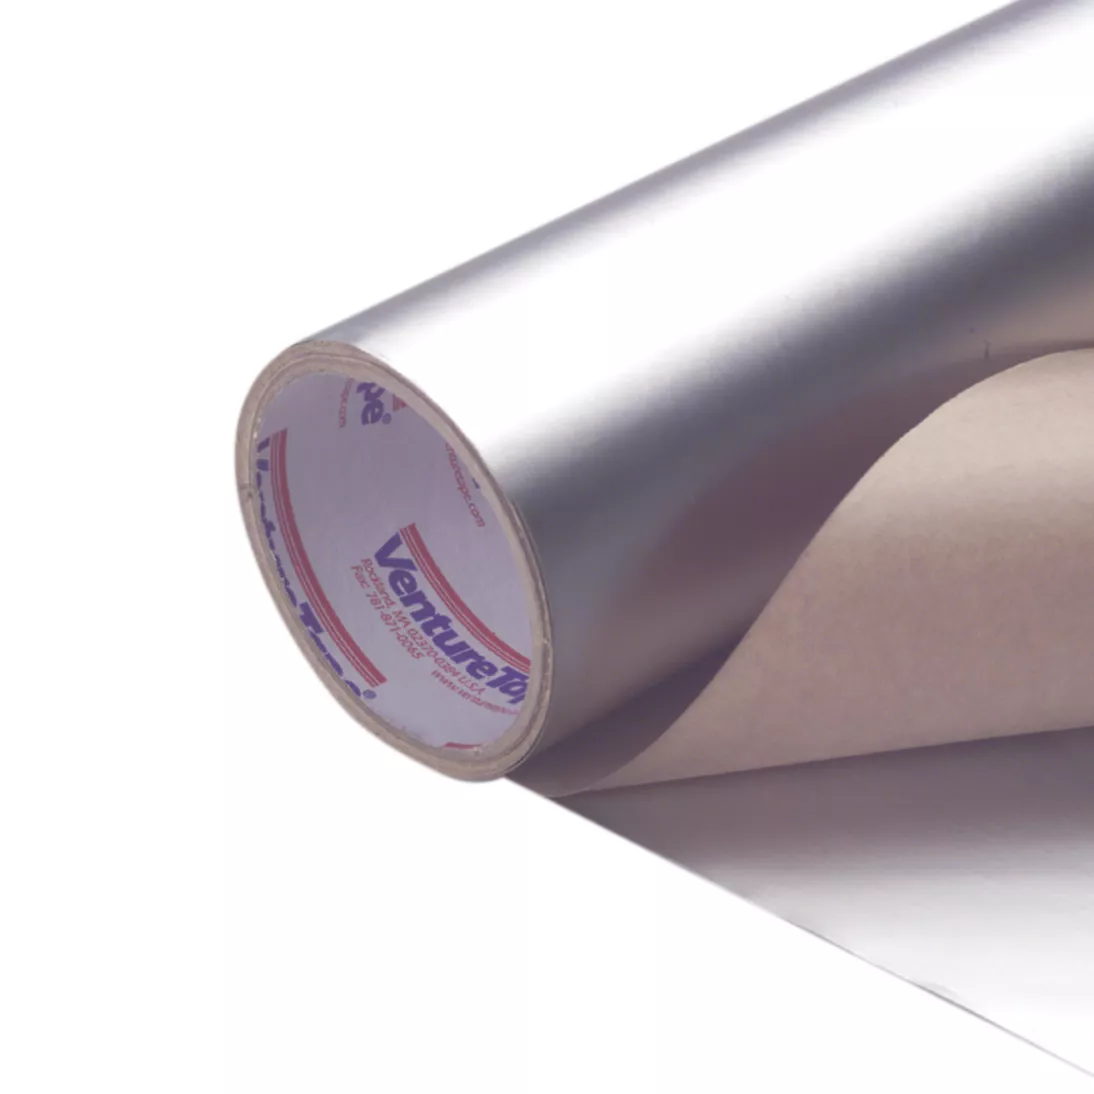 3M™ VentureClad™ Insulation Jacketing Tape 1577CW-E, Silver, 46 in x 50
yd, 1 roll per case